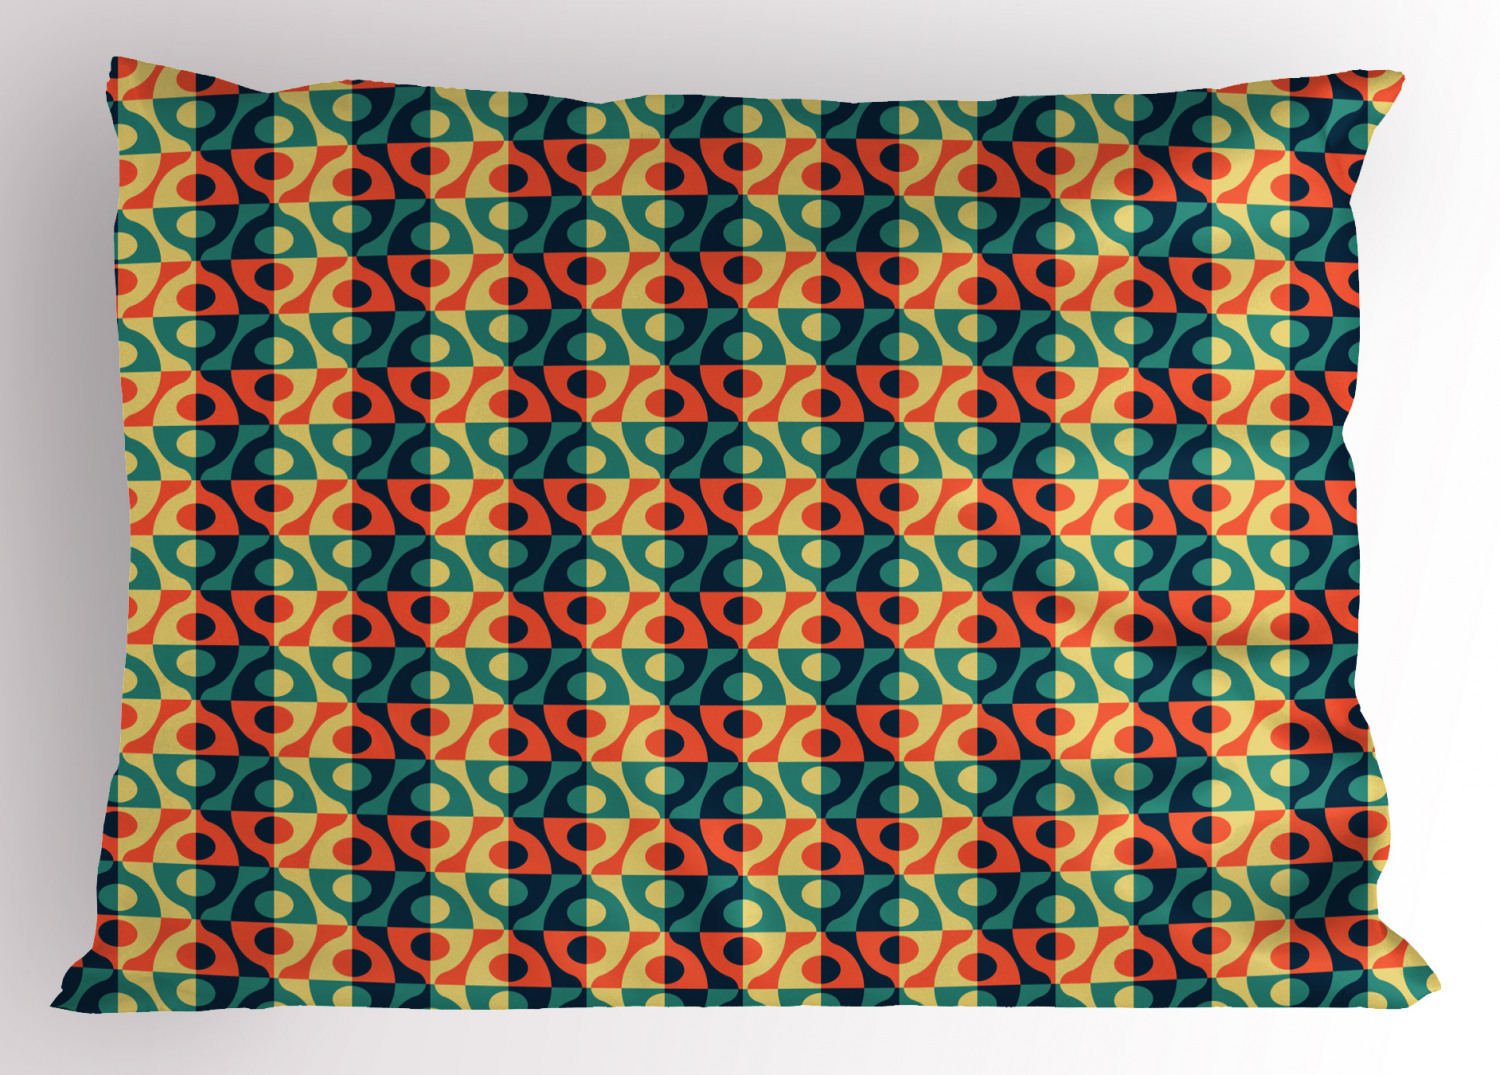 Details about   Eighties Geometry Pillow Sham Decorative Pillowcase 3 Sizes Bedroom Decoration 